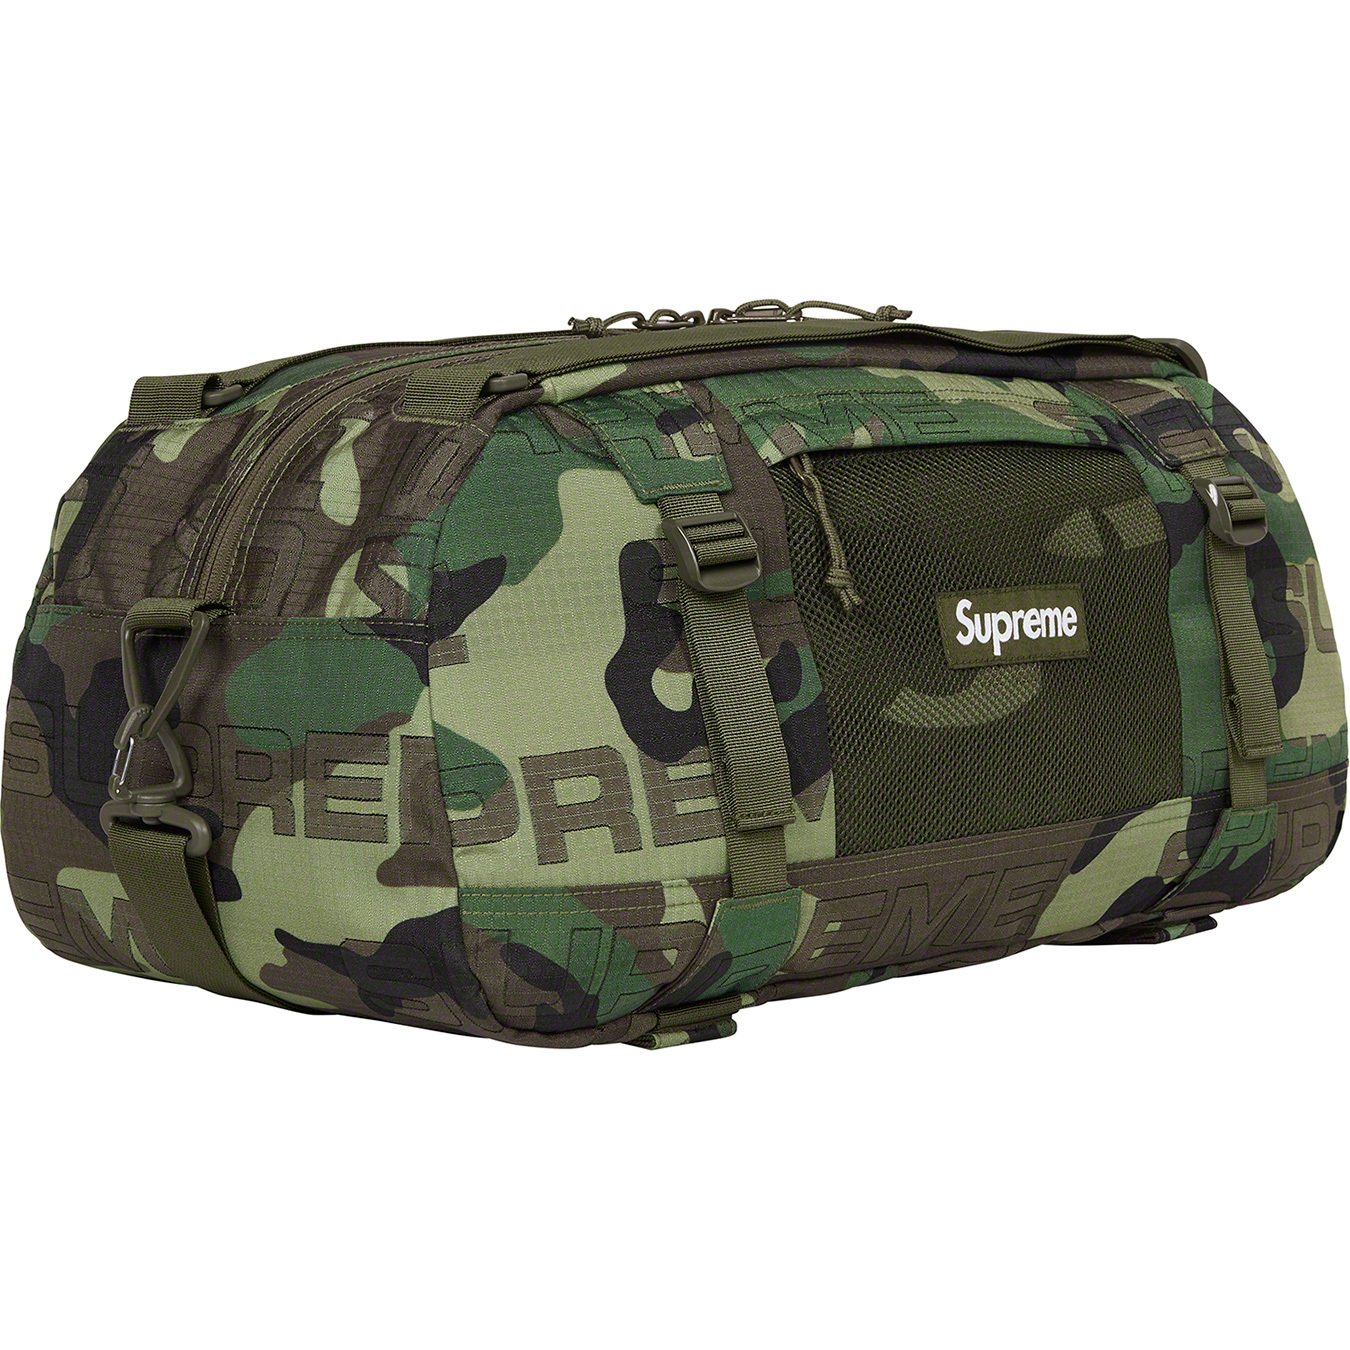 Supreme Backpack FW 21 - Woodland Camo